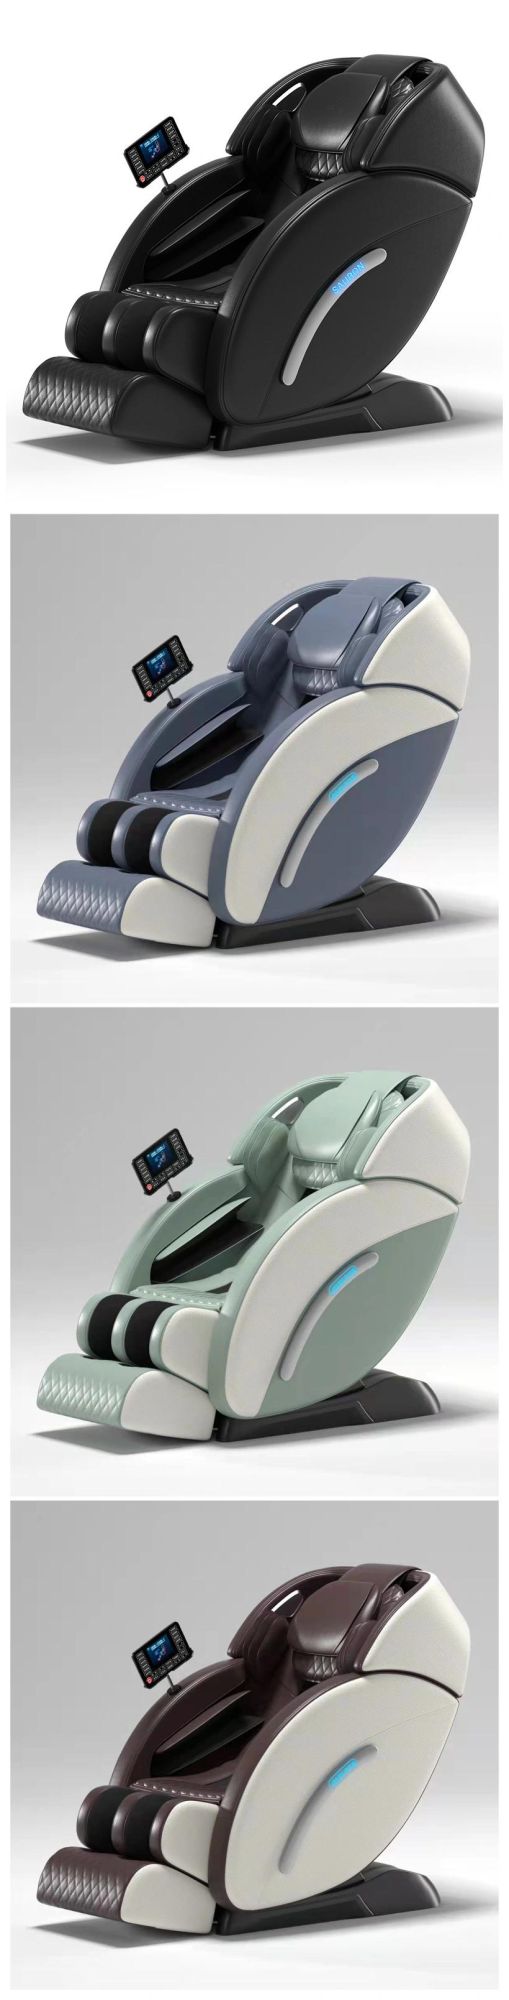 Sauron T100 Shiatsu 3D Airbag Heating Foot Roller Massage Chair Price